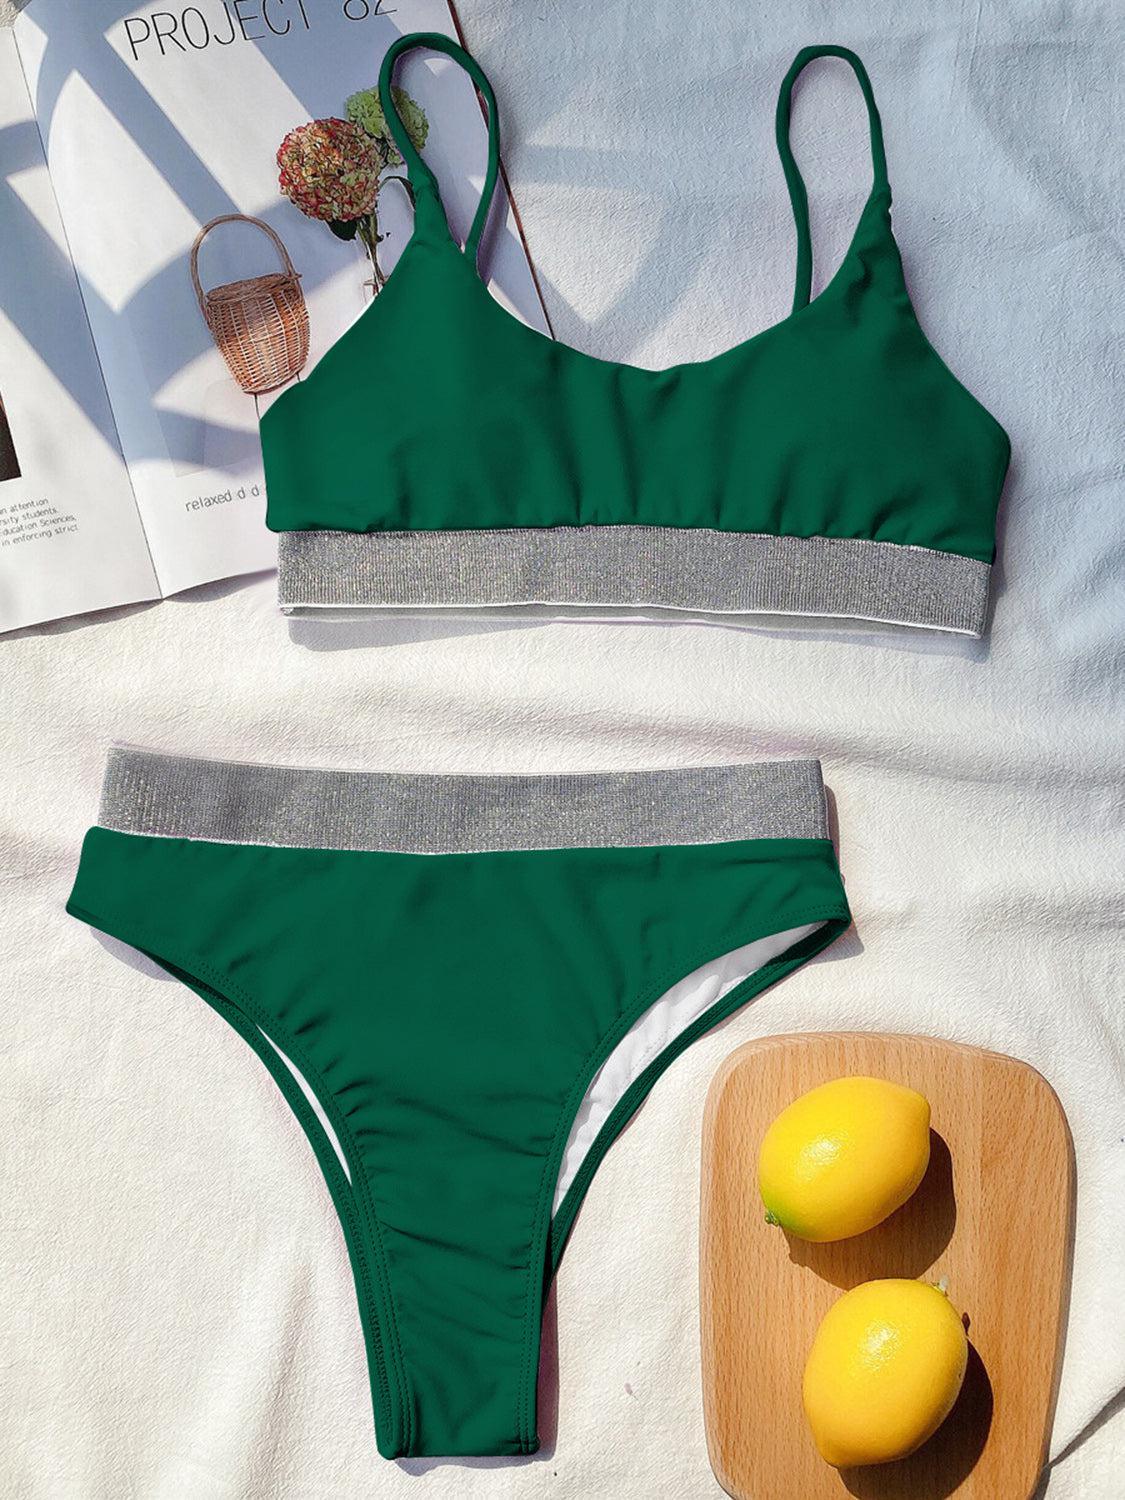 a green bikini top and two lemons on a bed